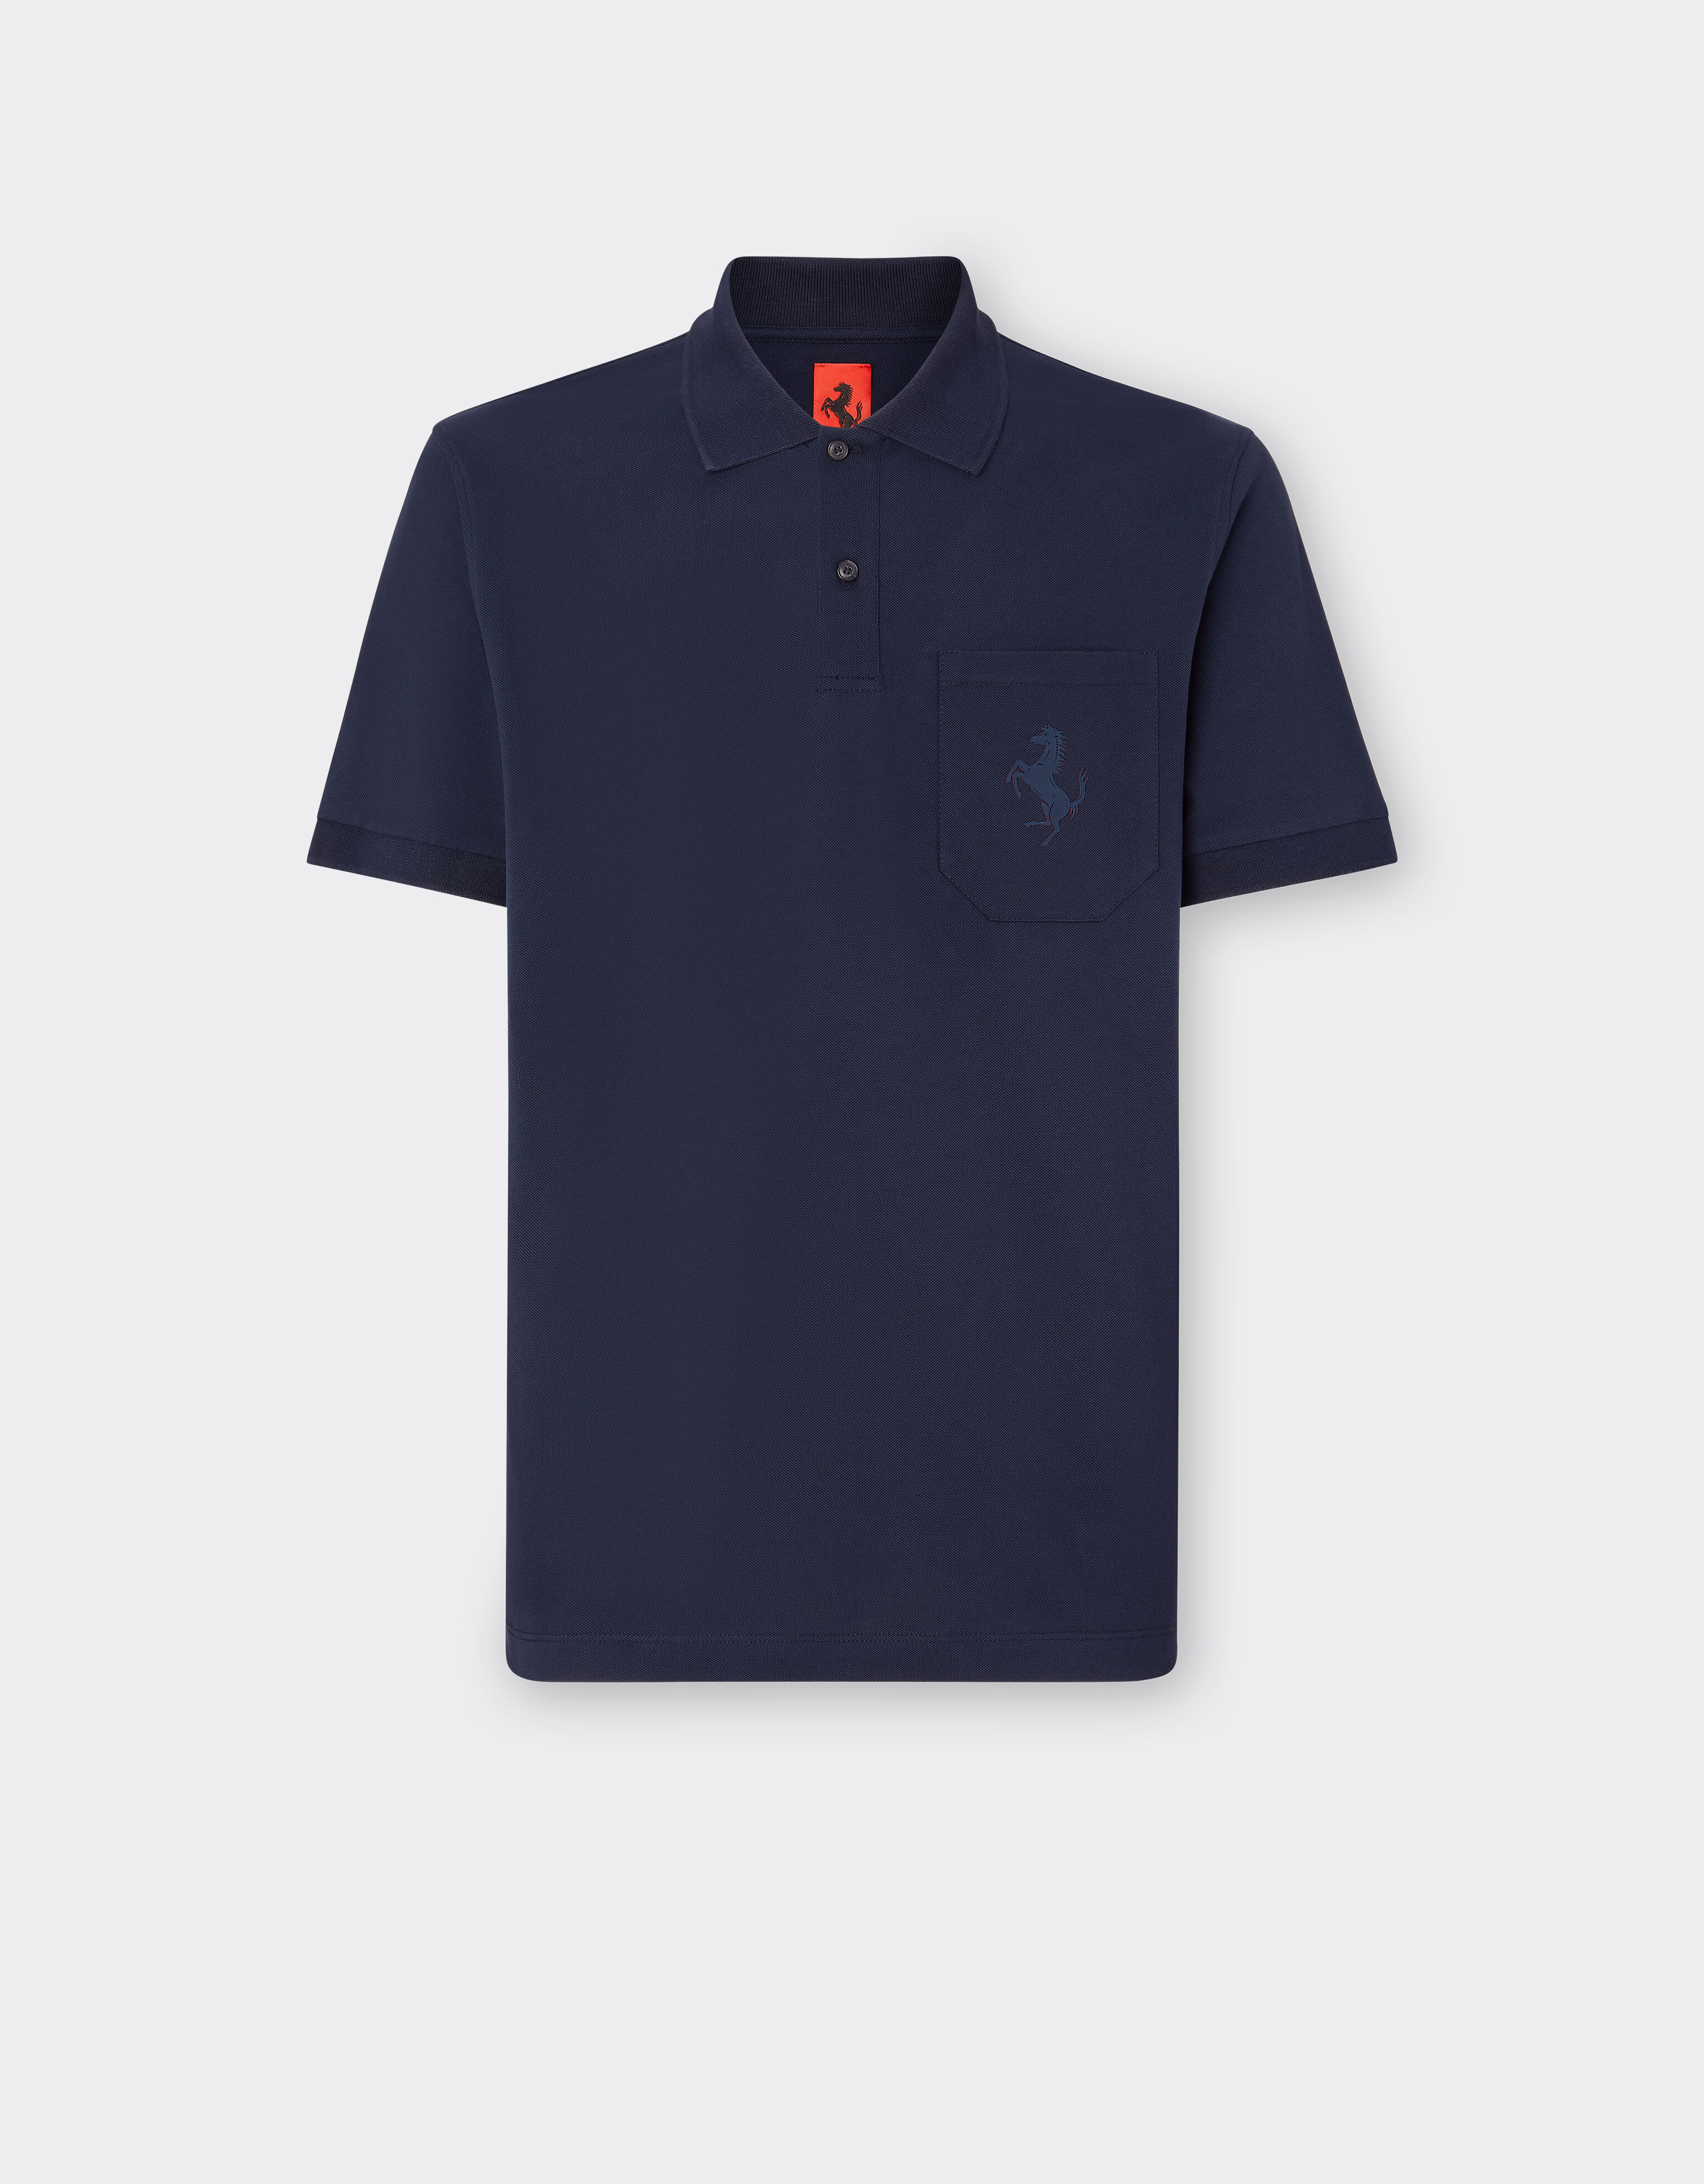 Ferrari Piqué cotton polo shirt with Prancing Horse detail Antique Blue 48300f